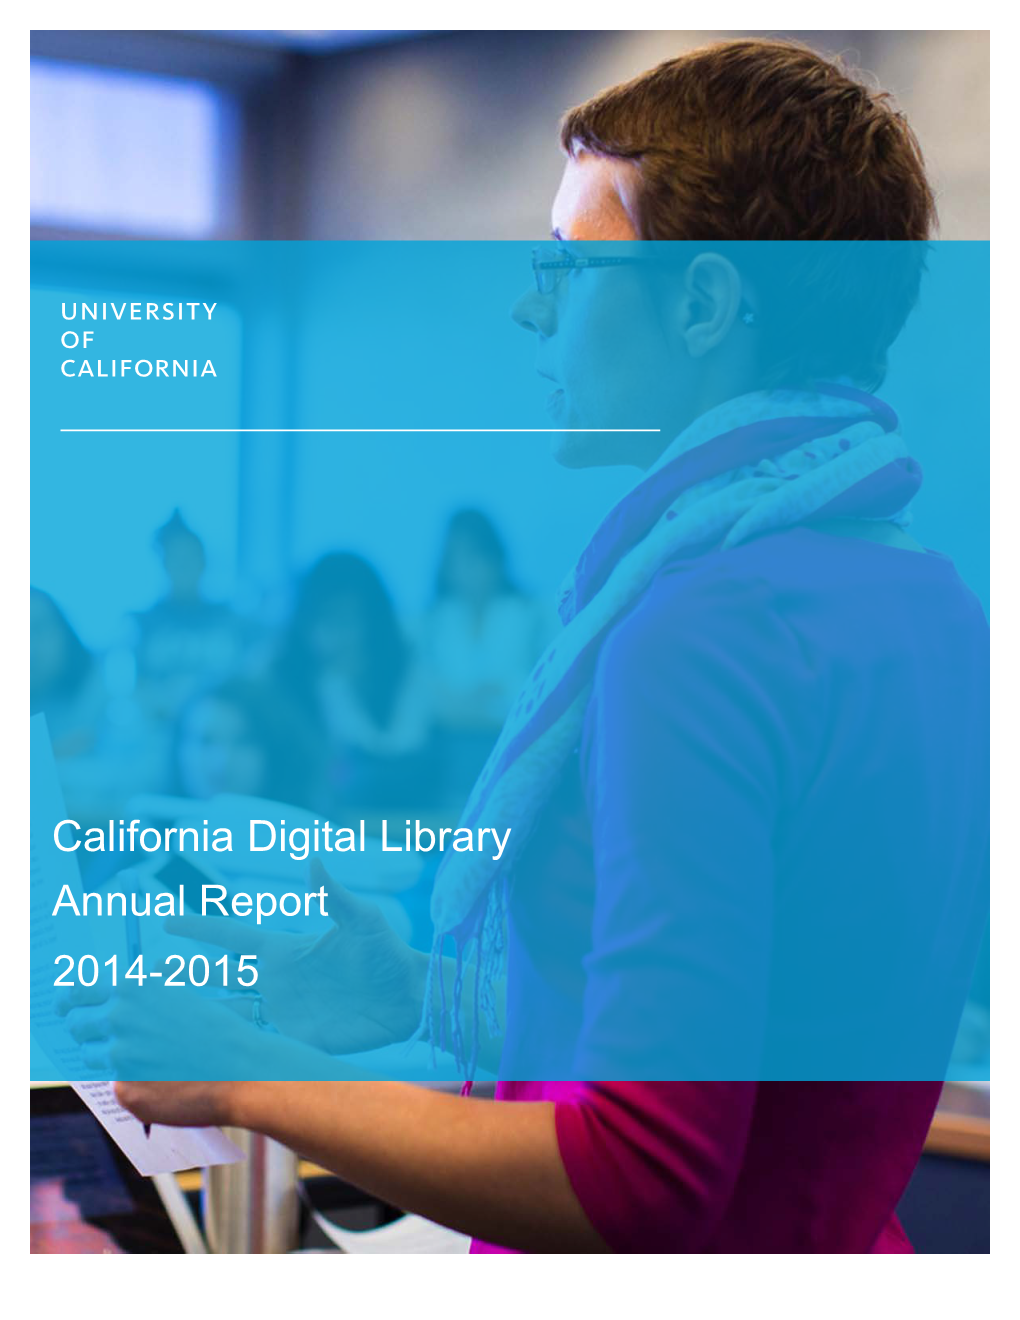 CDL Annual Report 2014-2015